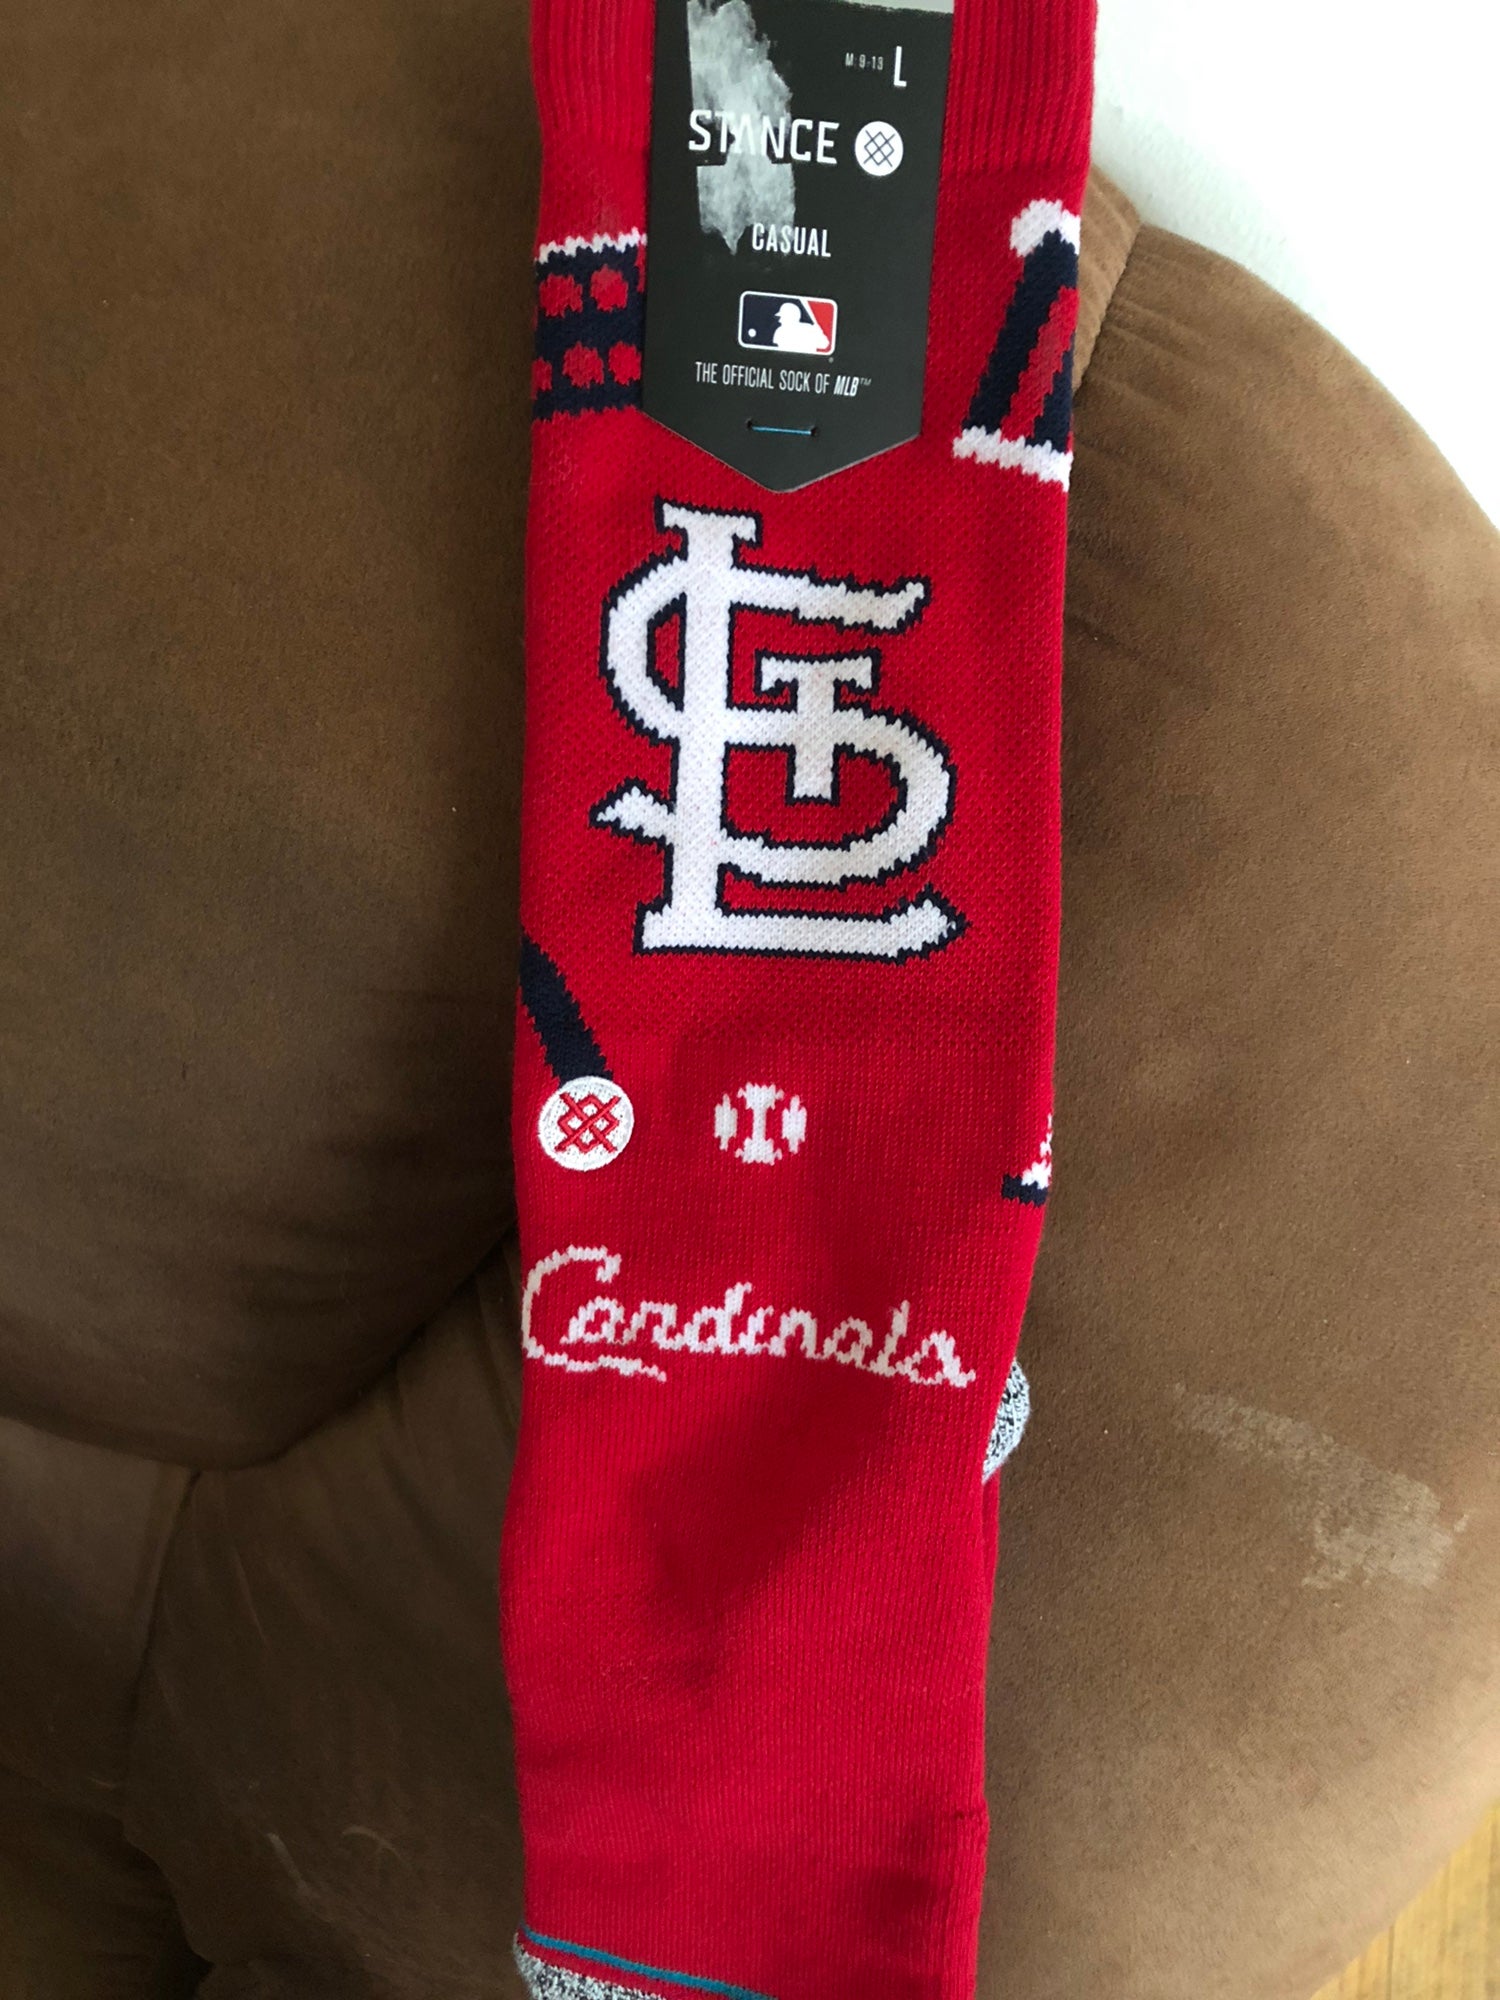 Stance St. Louis Cardinals Socks - Men's Socks in Navy